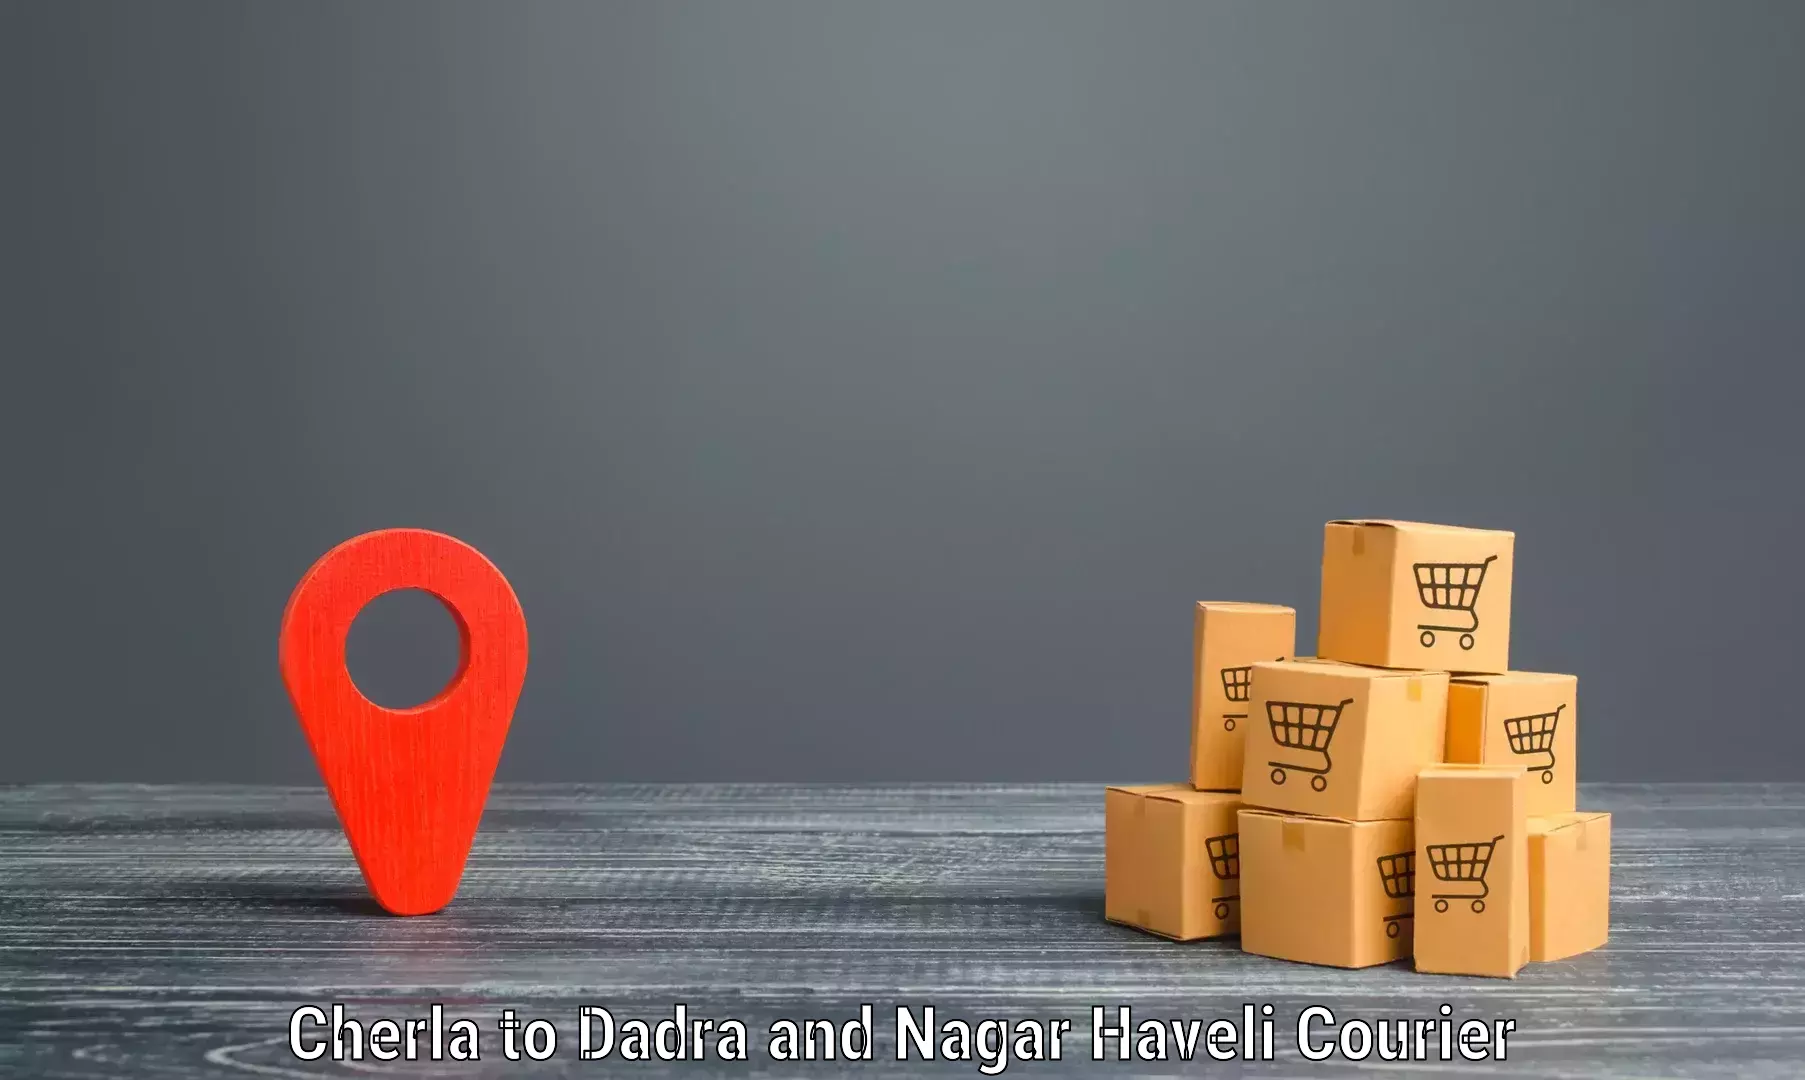 Cash on delivery service Cherla to Dadra and Nagar Haveli